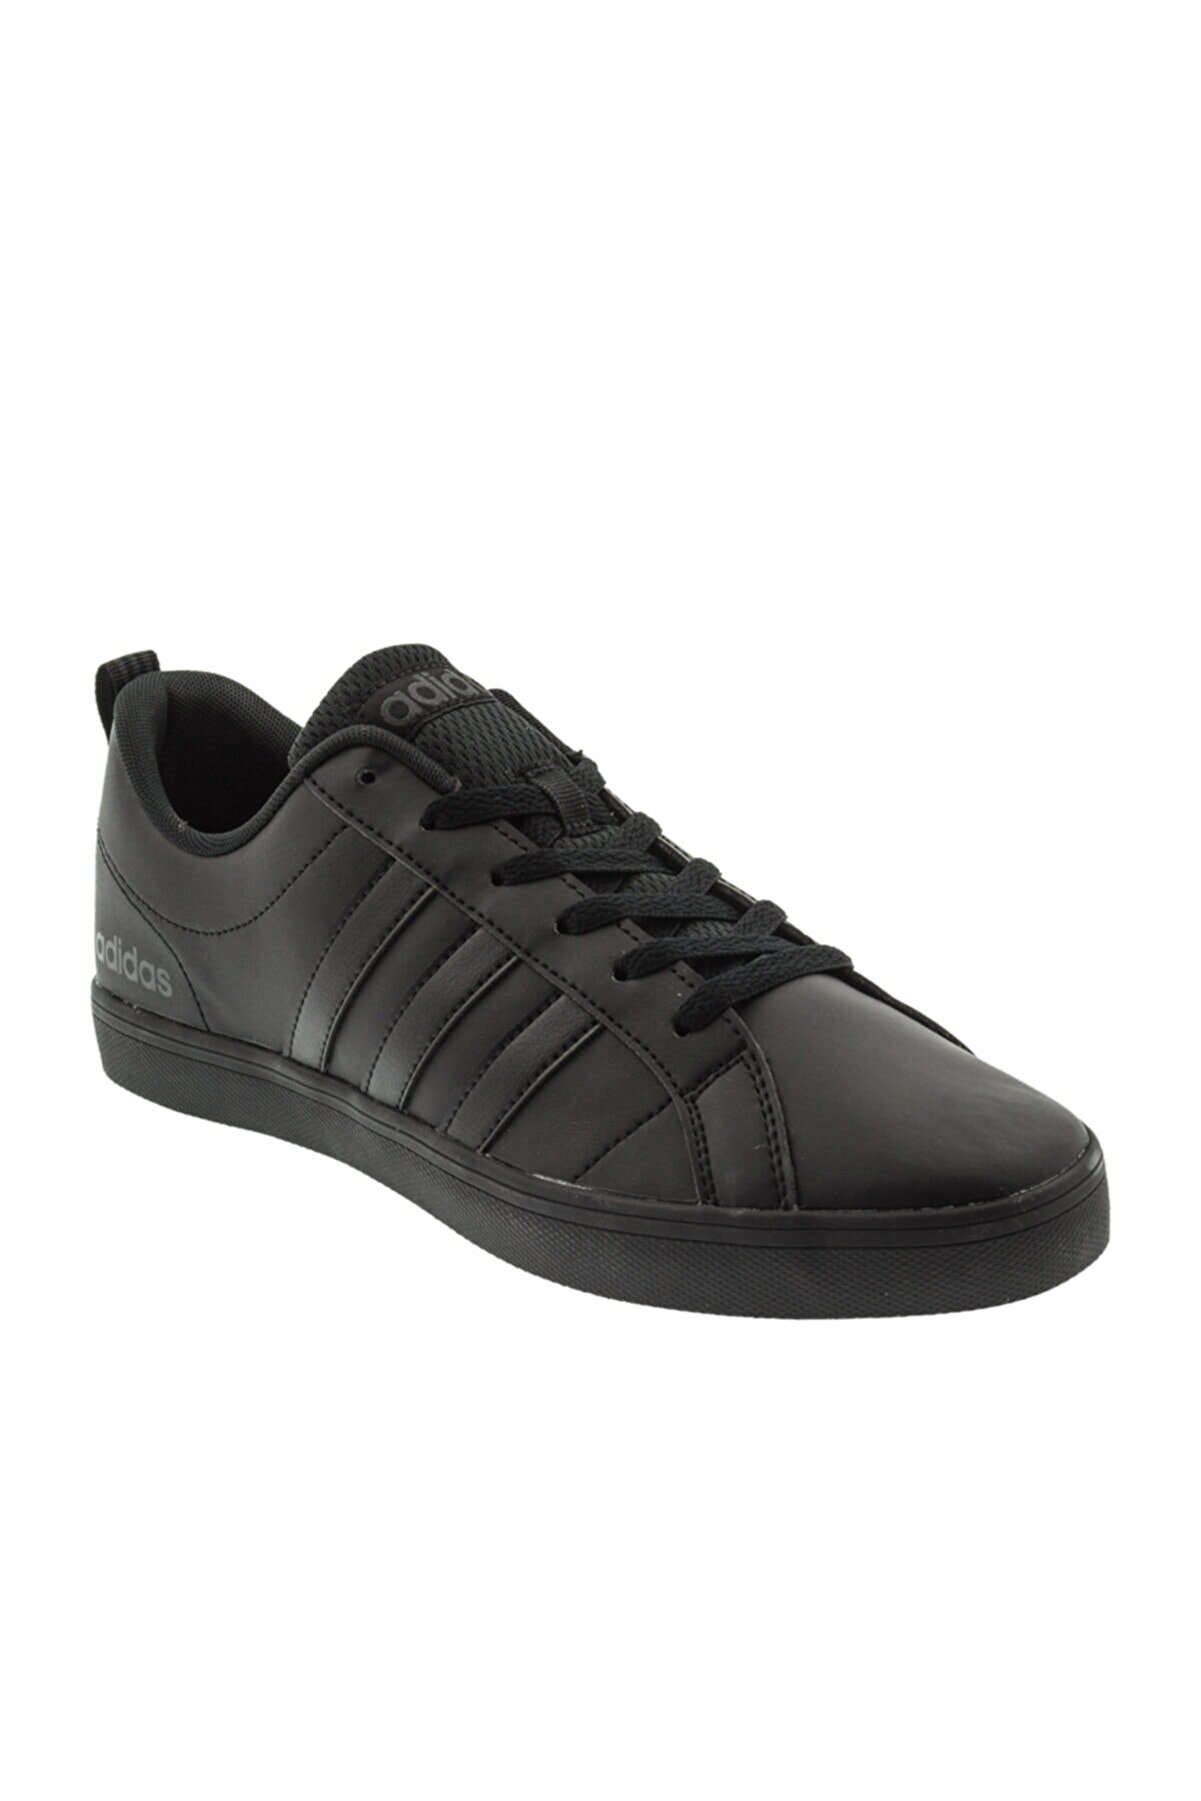 adidas VS PACE Siyah Erkek Sneaker Ayakkabı 100350651